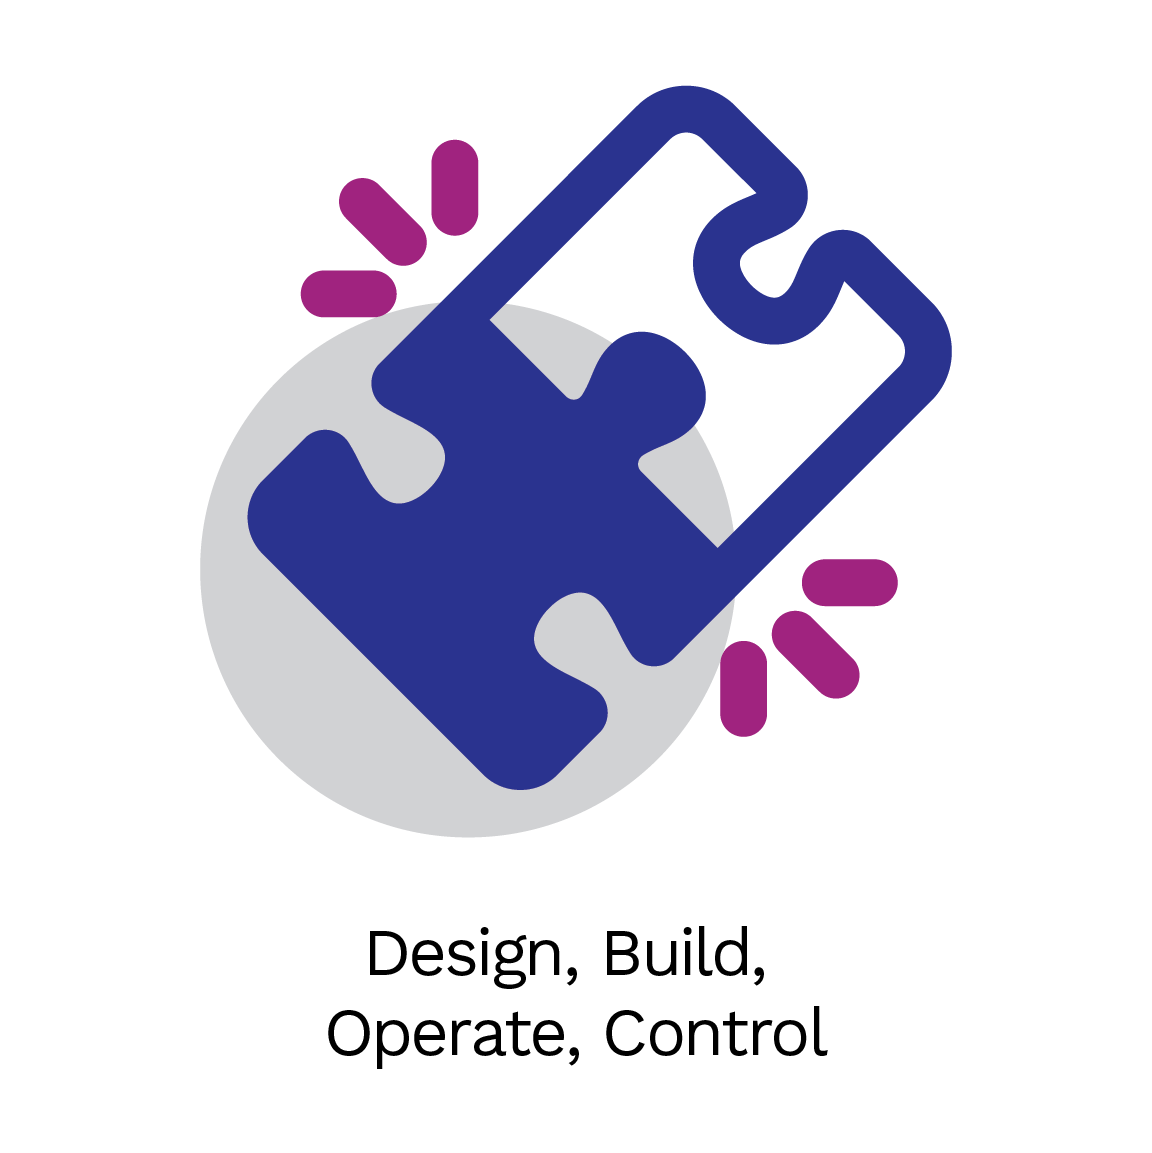 Design, Build, Operate, Control